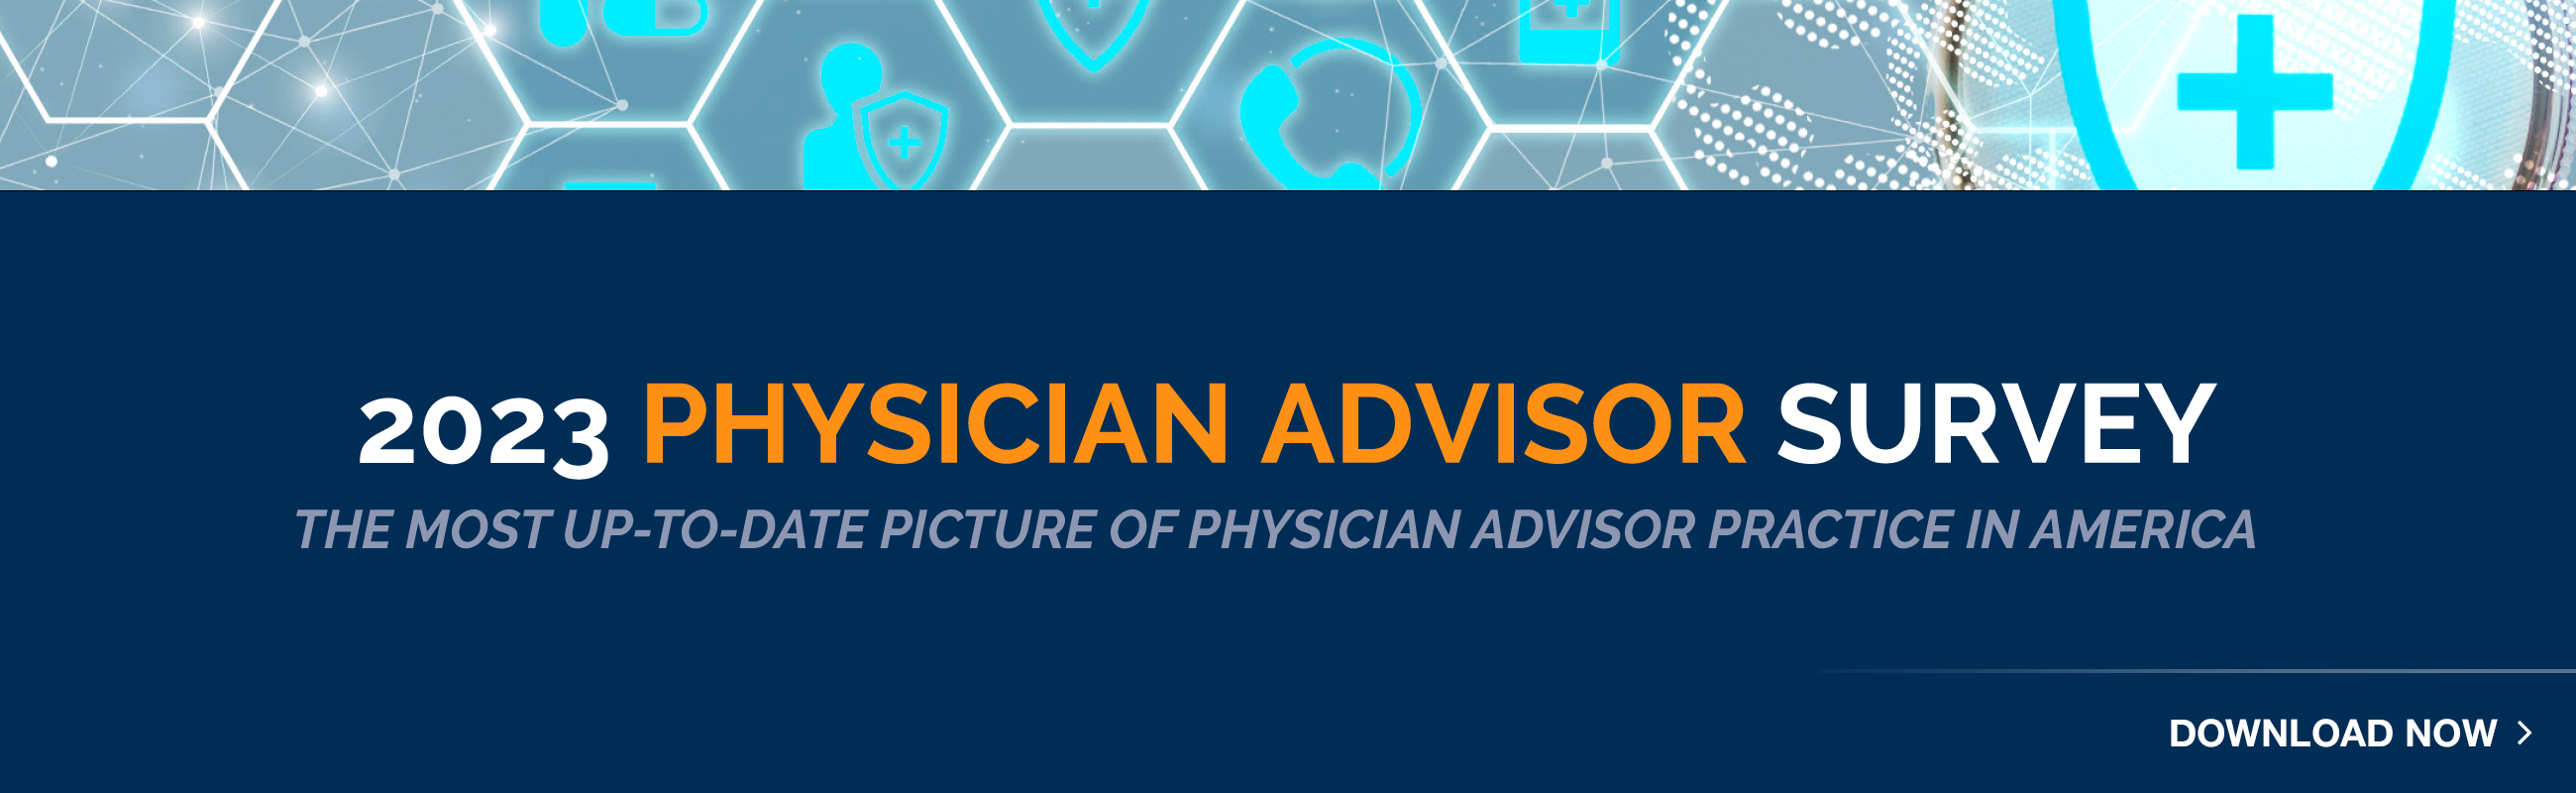 2023 Physician Advisor Survey